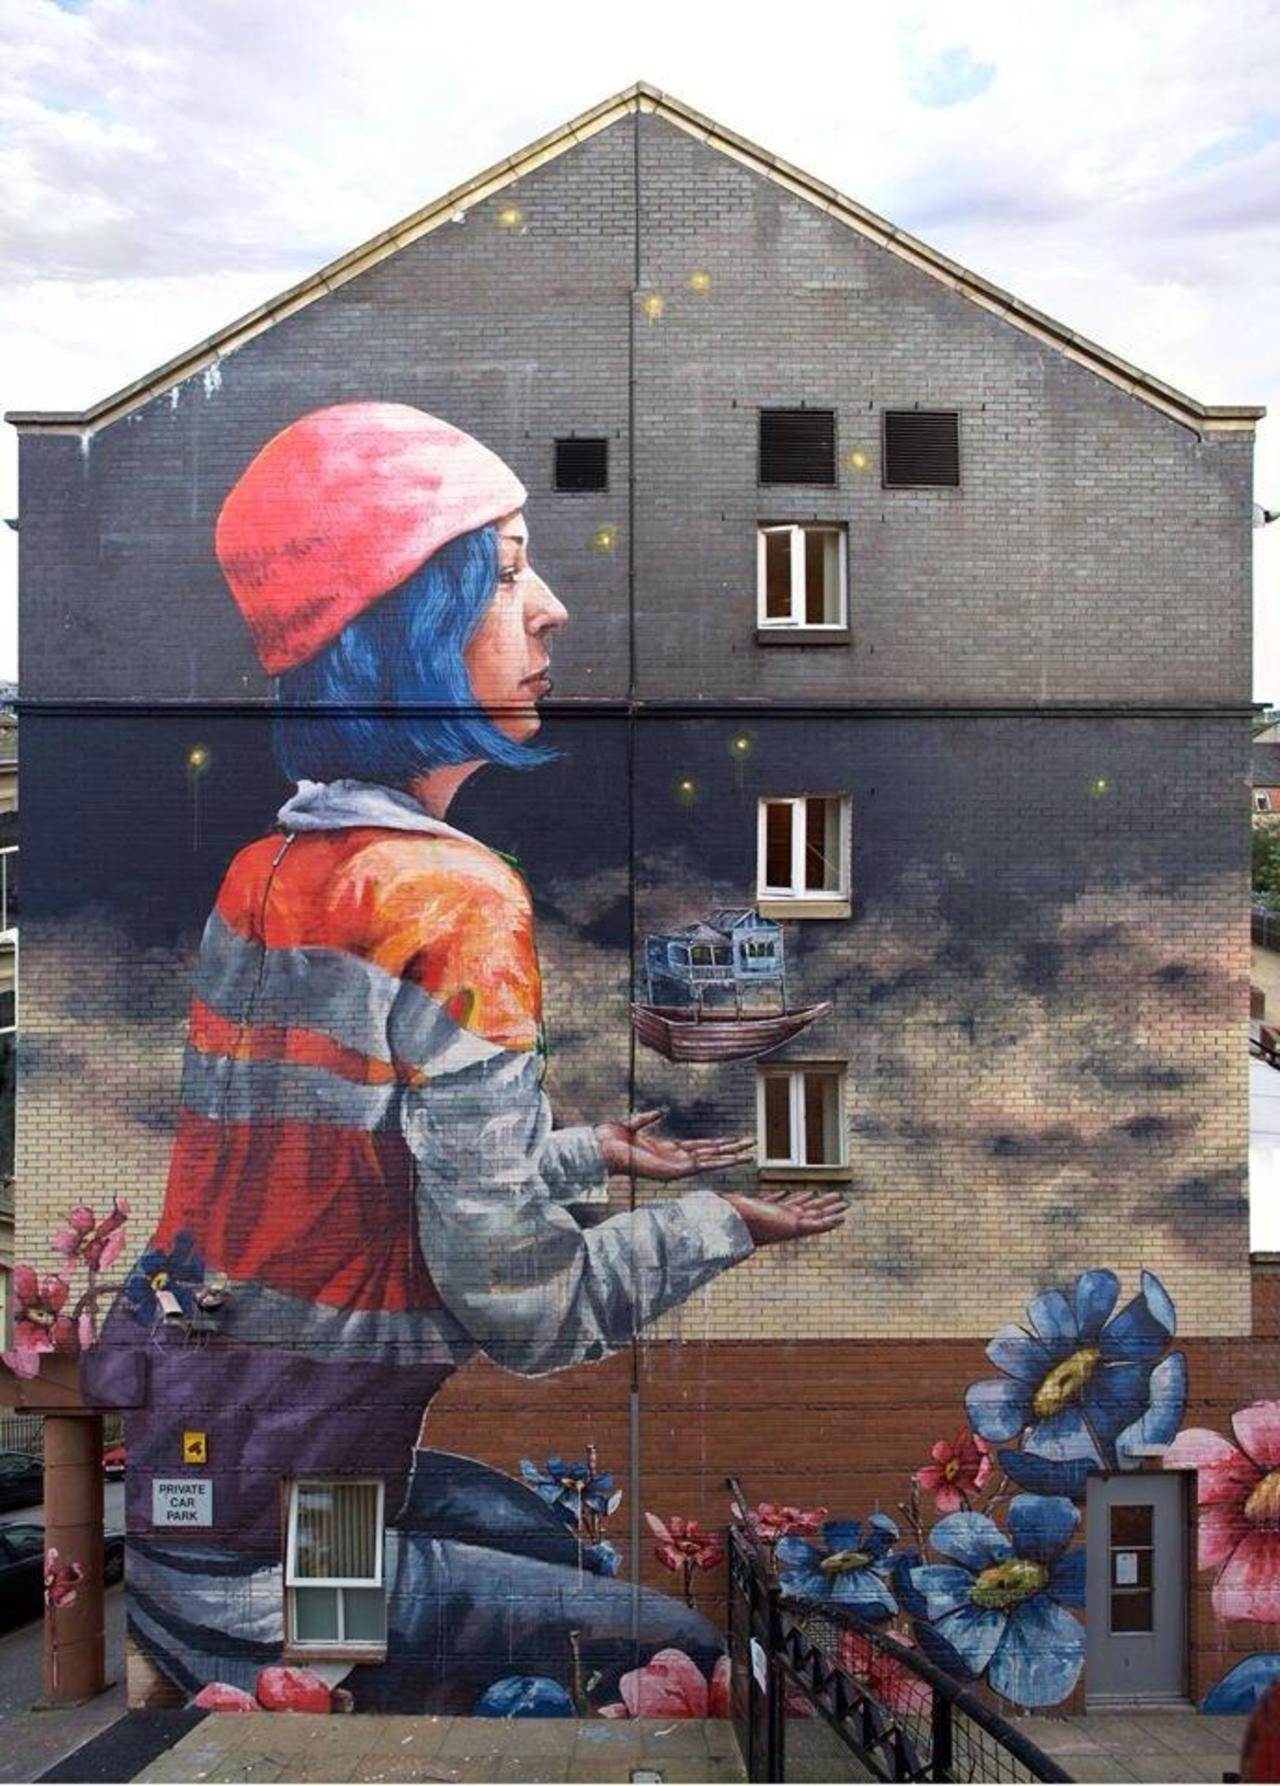 Artist Fintan McGee new wonderful Street Art mural in Glasgow, Scotland #art #mural #graffiti #streetart http://t.co/Vh0JYkqLRC